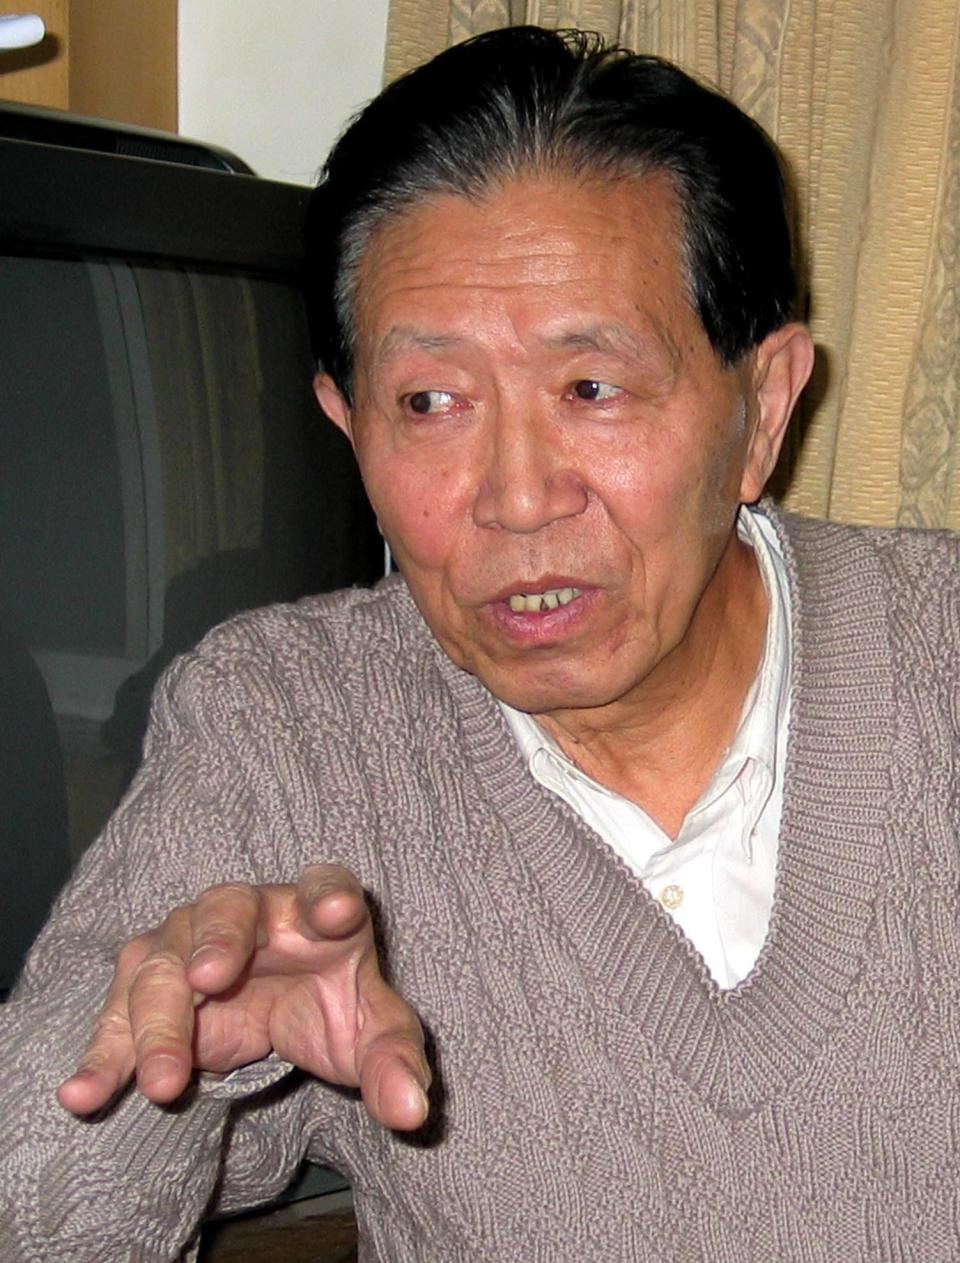 Military surgeon Jiang Yanyong is seen in a Beijing hotel room Monday, Feb. 9, 2004.